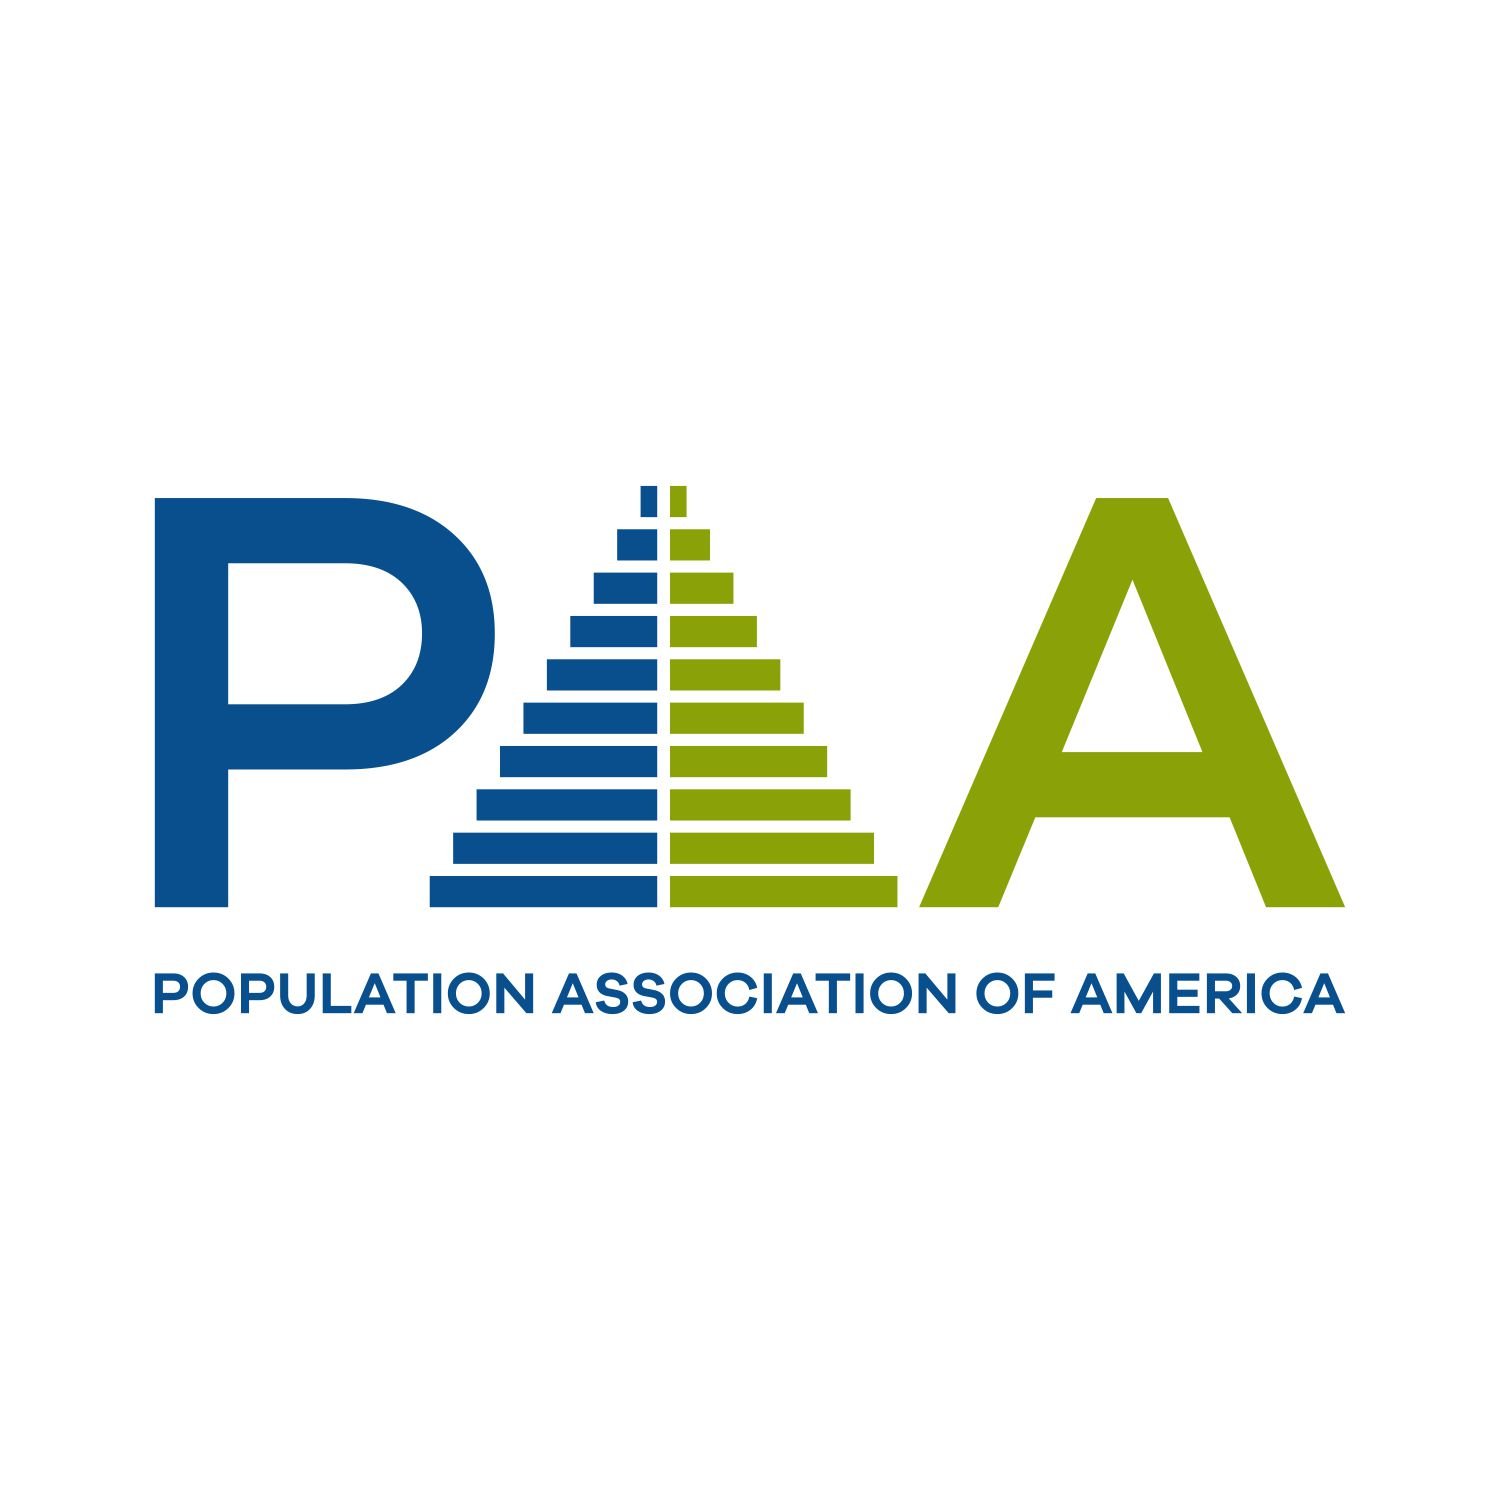 Population Association of America